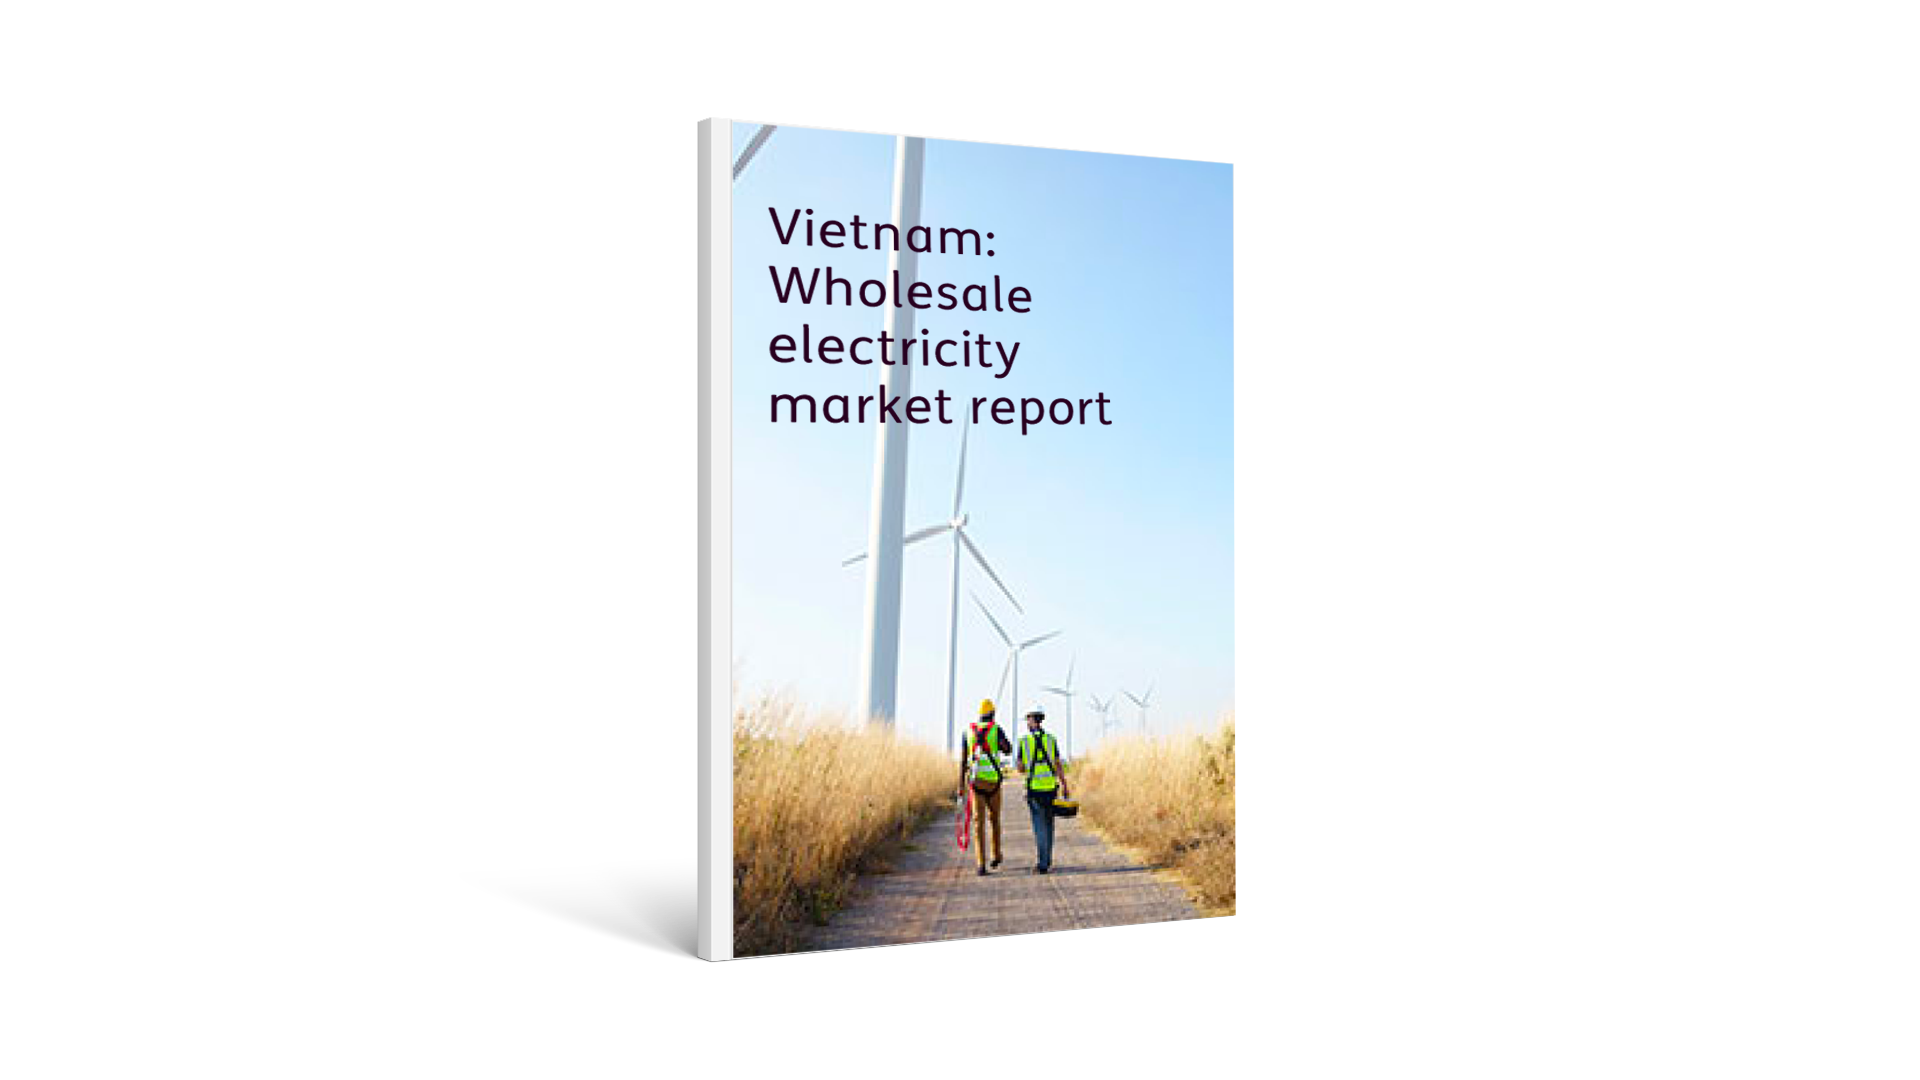 Vietnam: Wholesale electricity market report